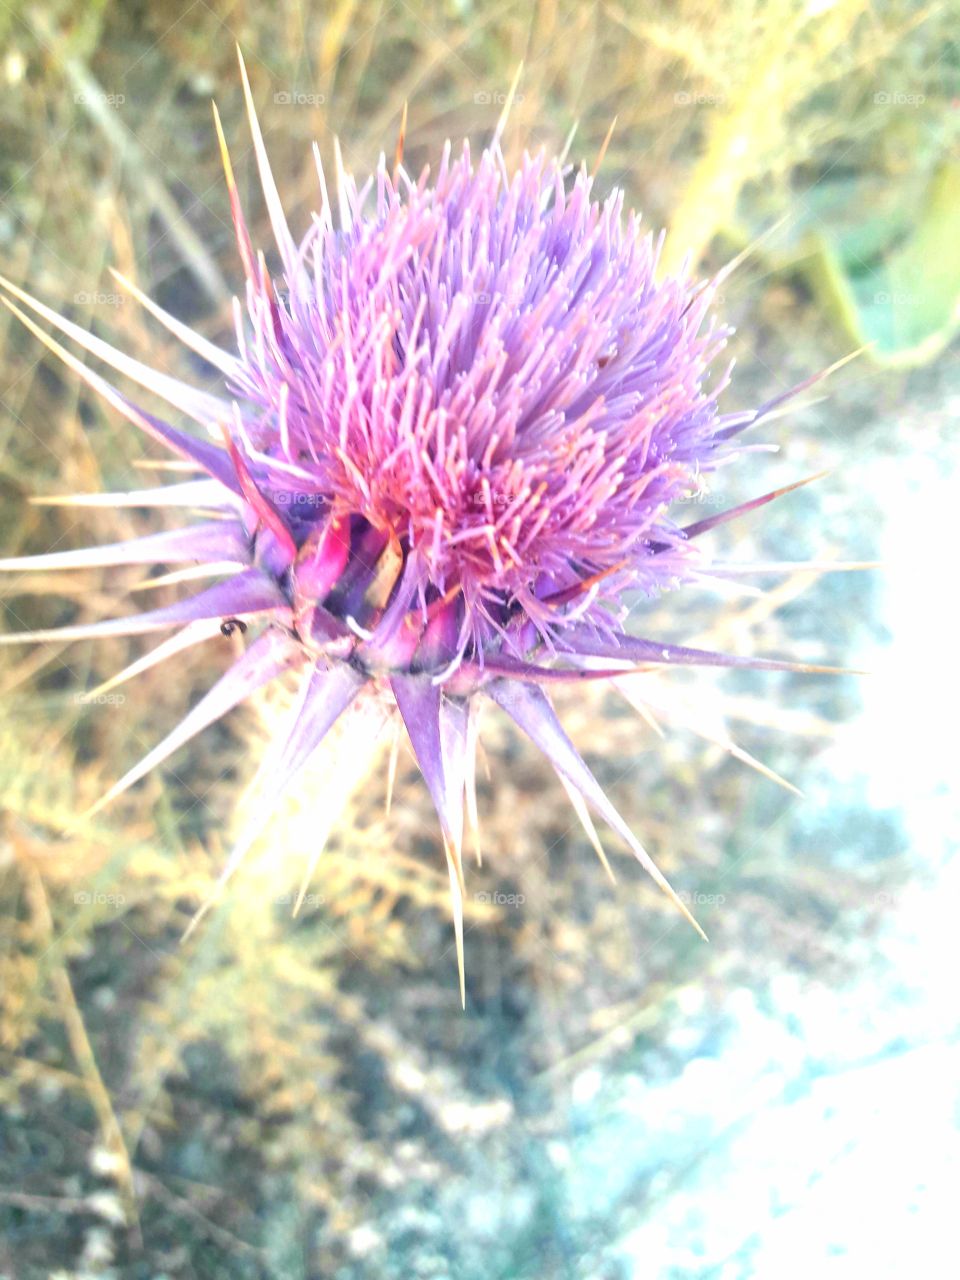 beautiful prickly flower